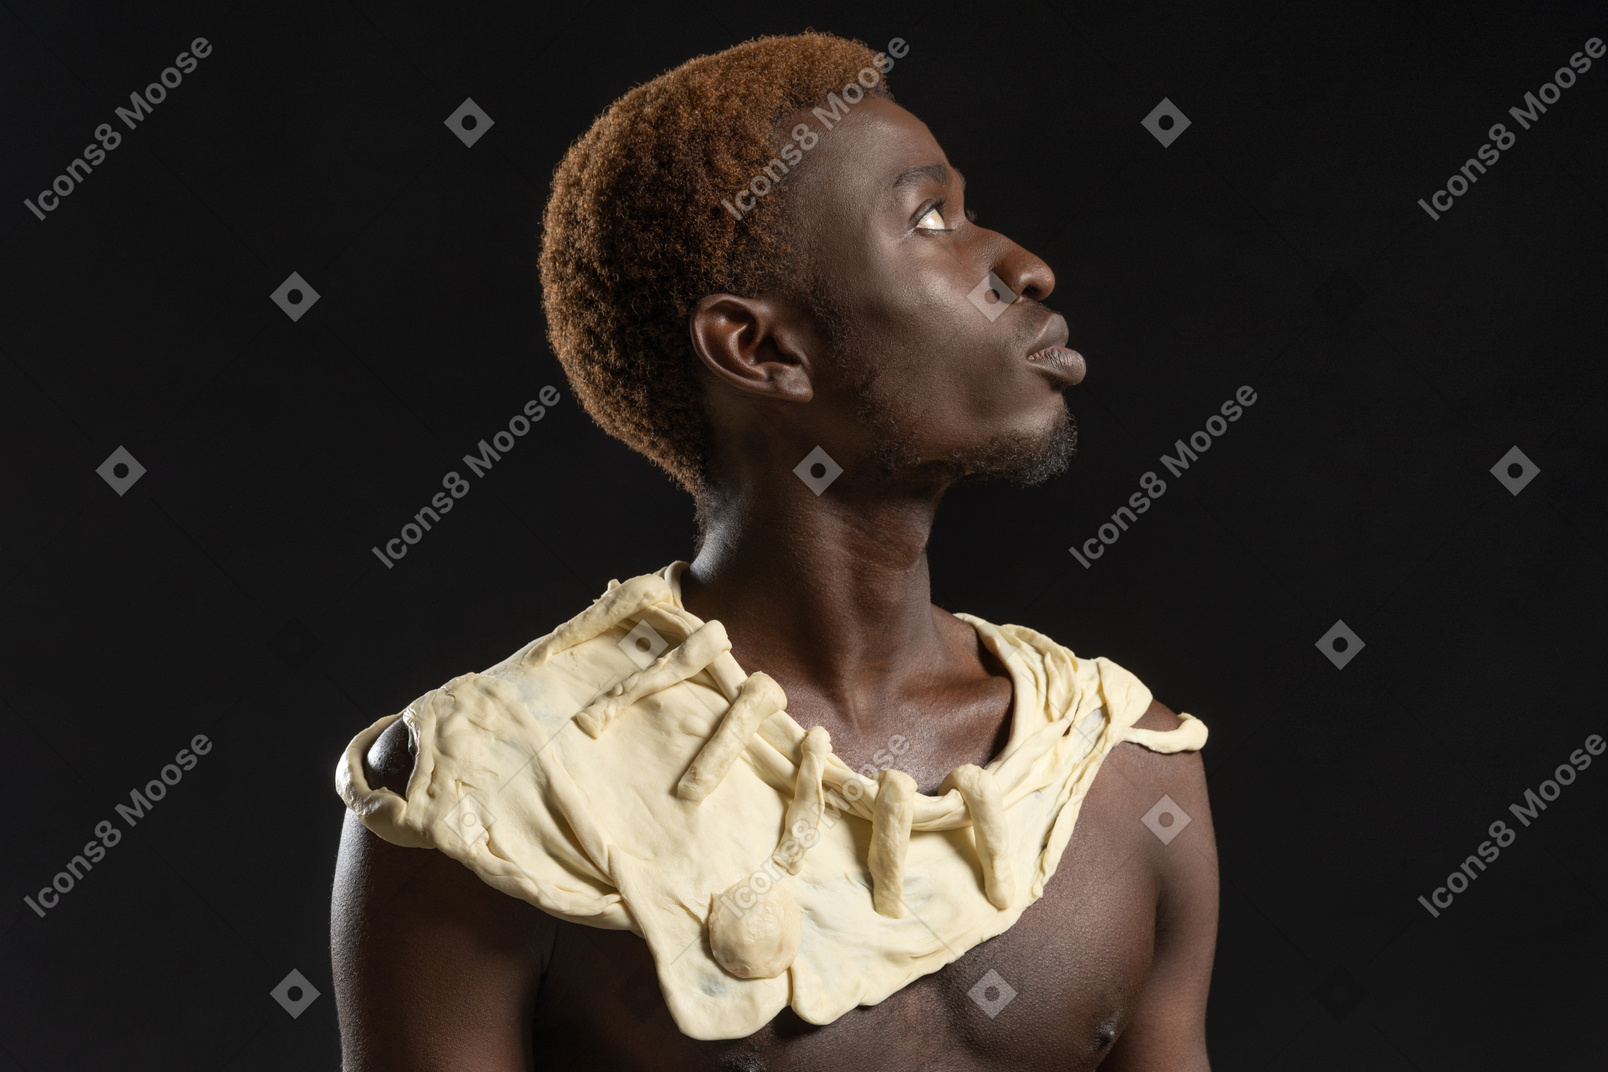 Retrato lateral de un hombre africano en el fondo oscuro con un collar de masa